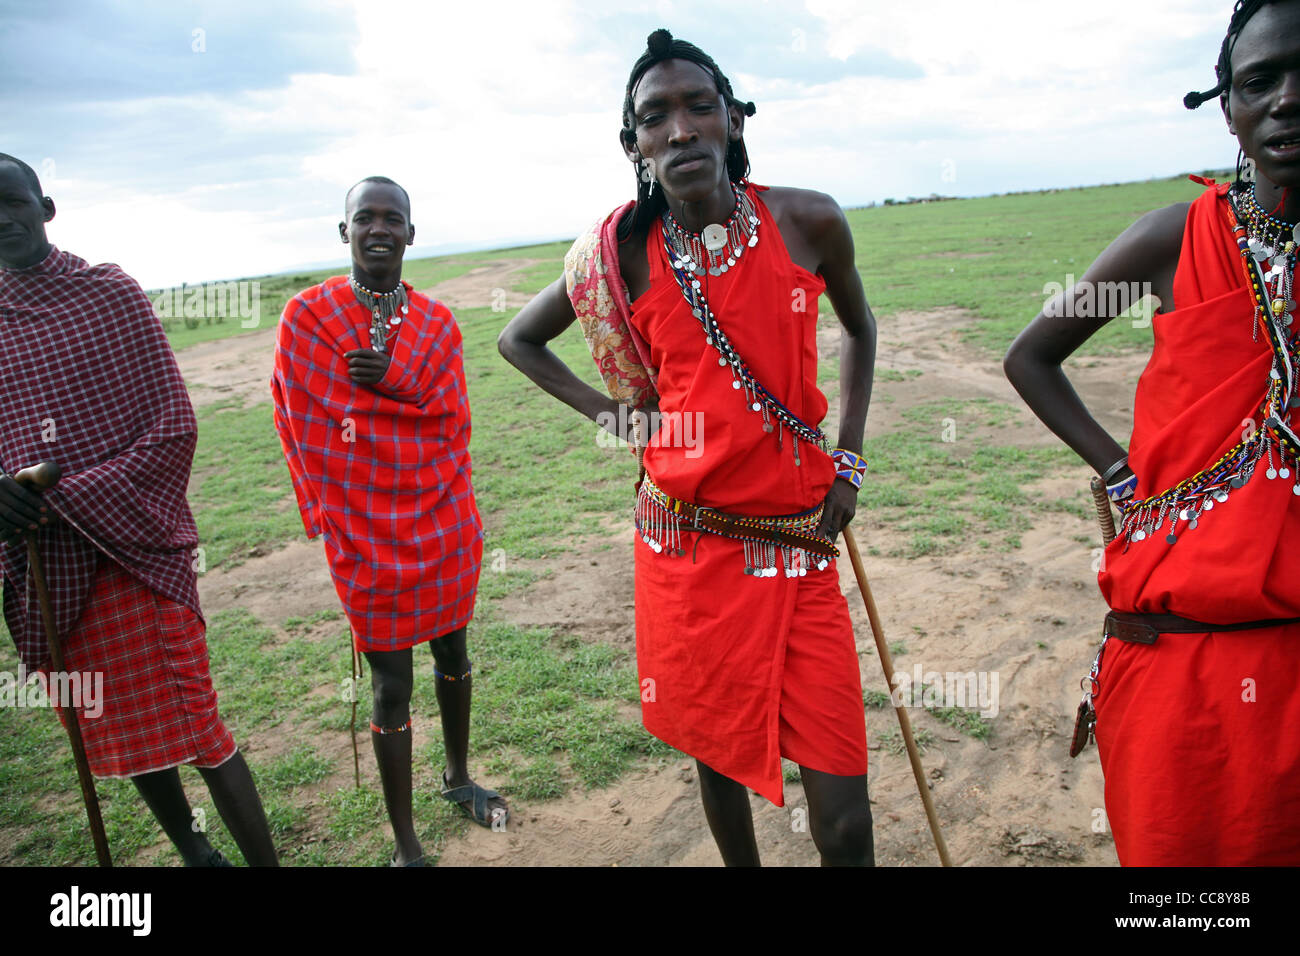 Masai men in traditional dress, Masai Mara, Kenya, East Africa. 2/2/2009. Photograph: Stuart Boulton/Alamy Stock Photo